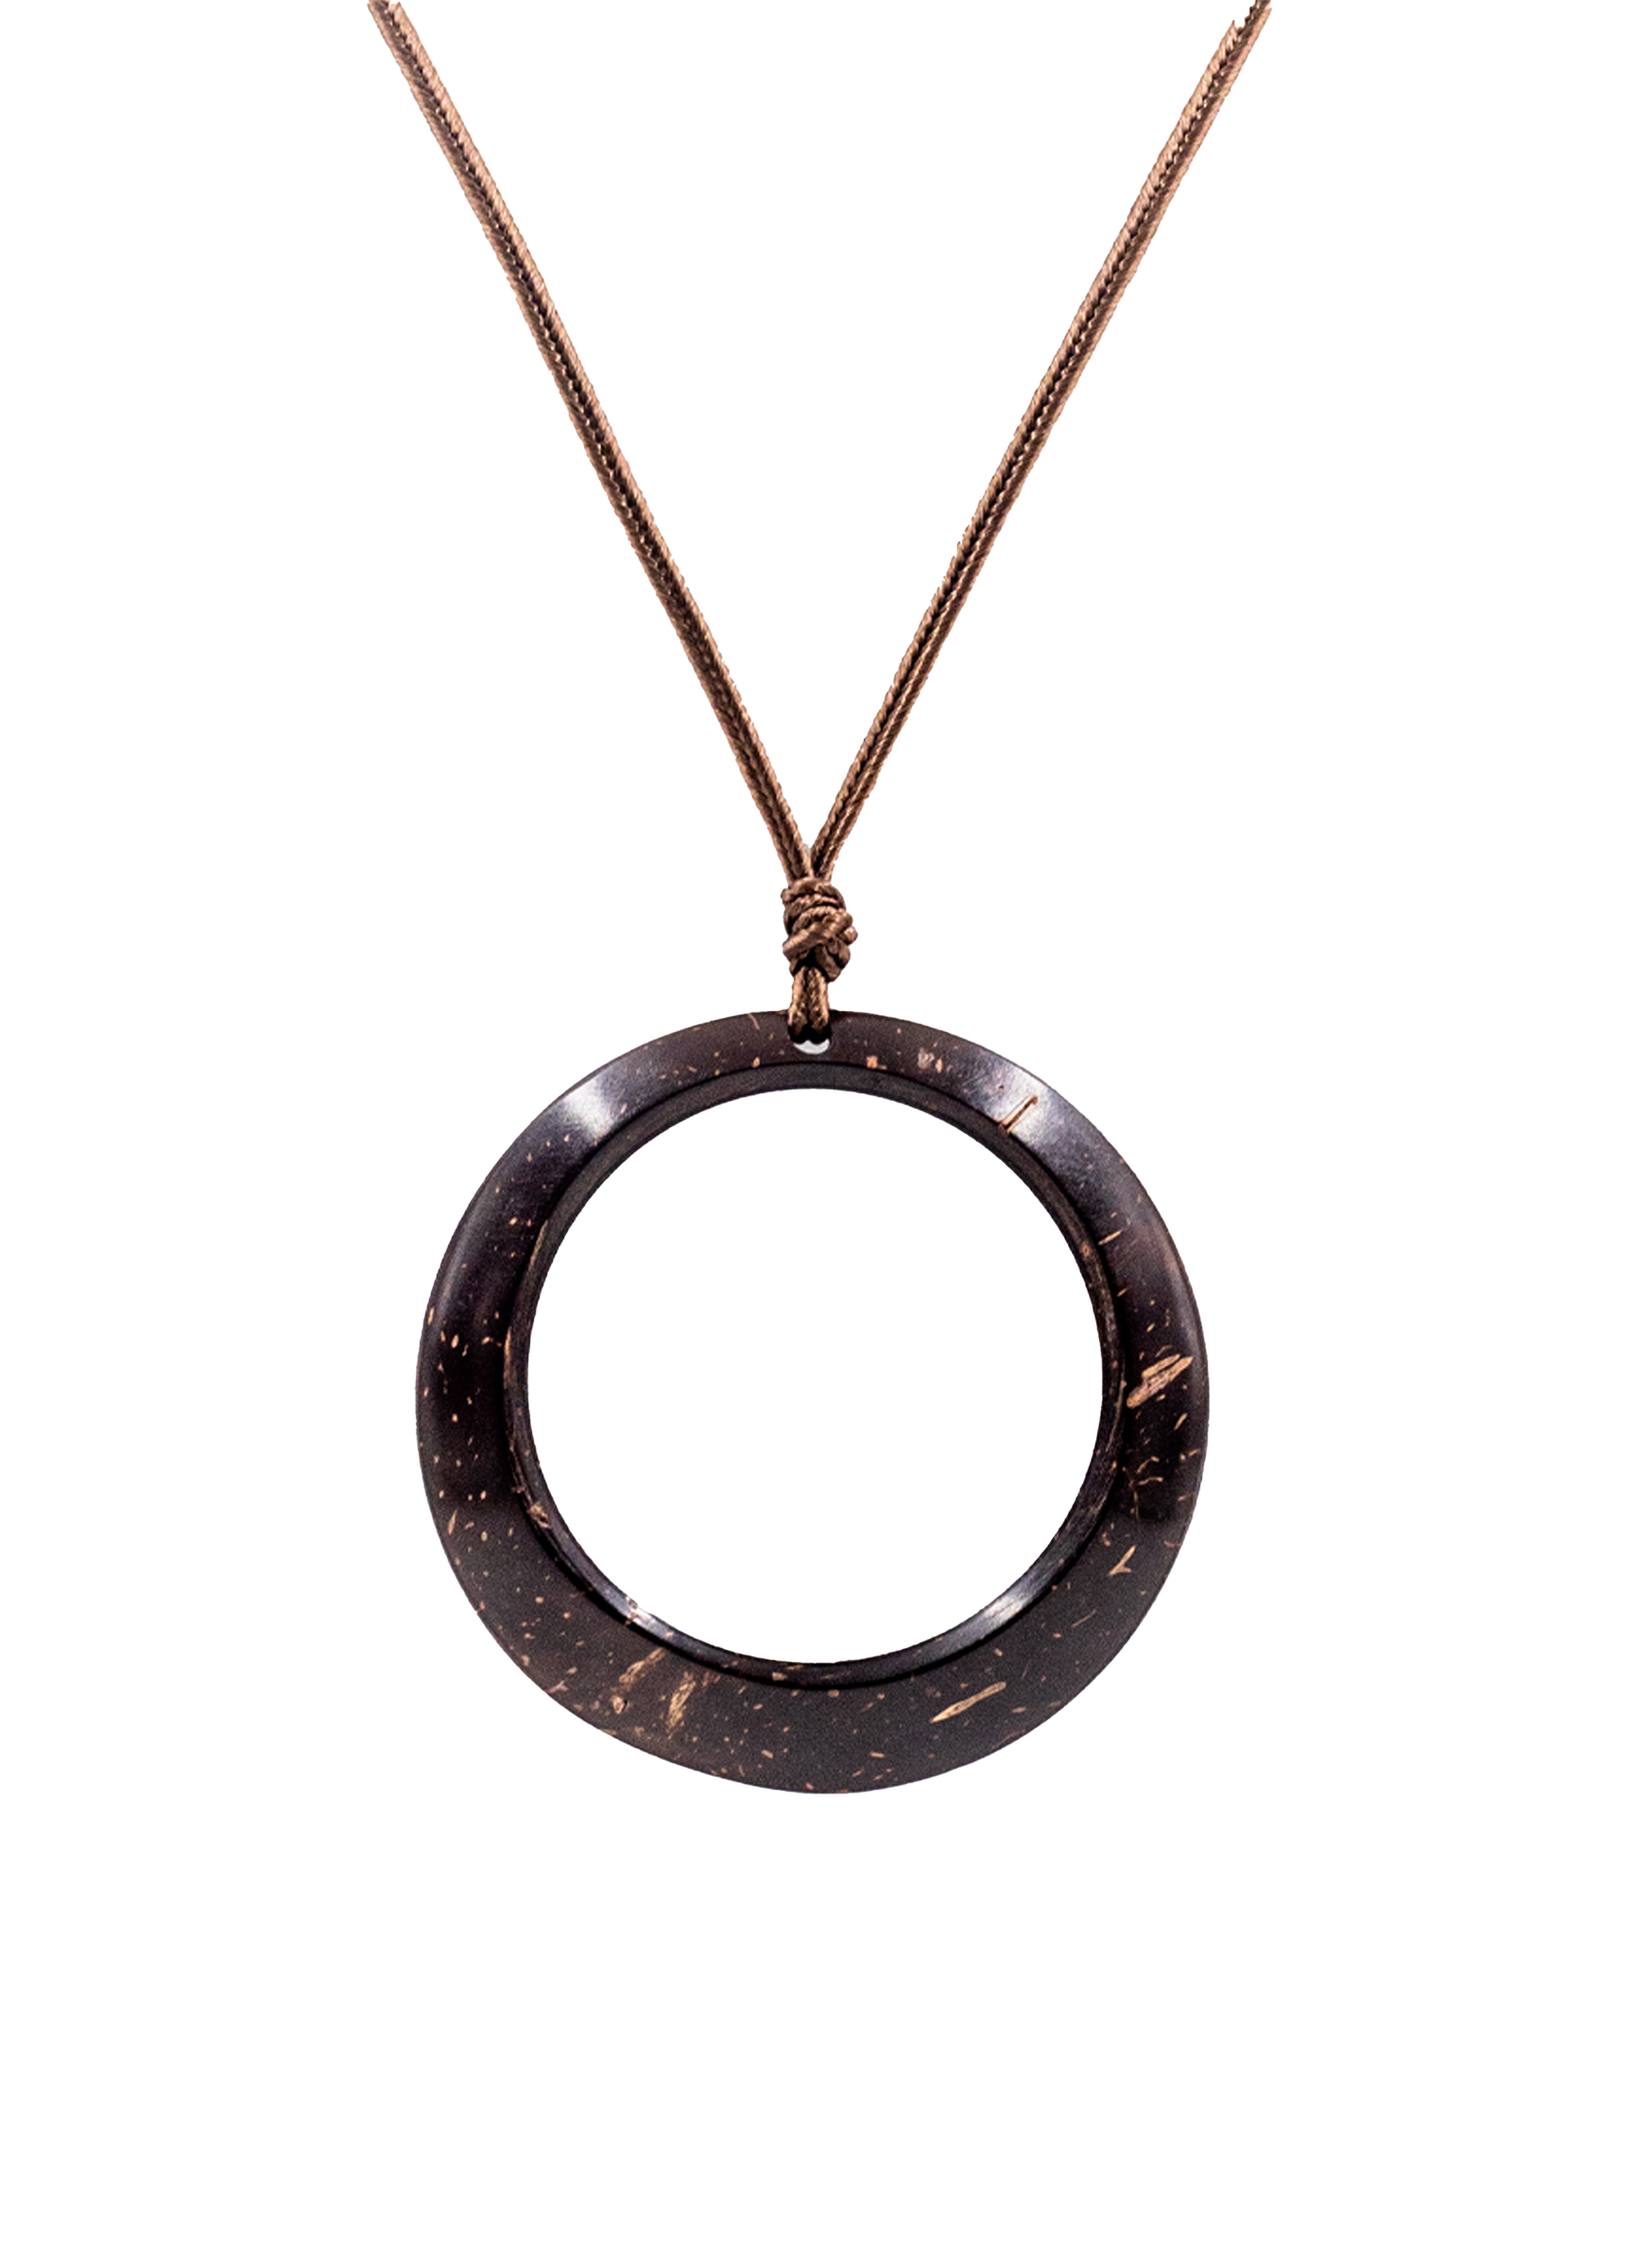 Round shape necklace